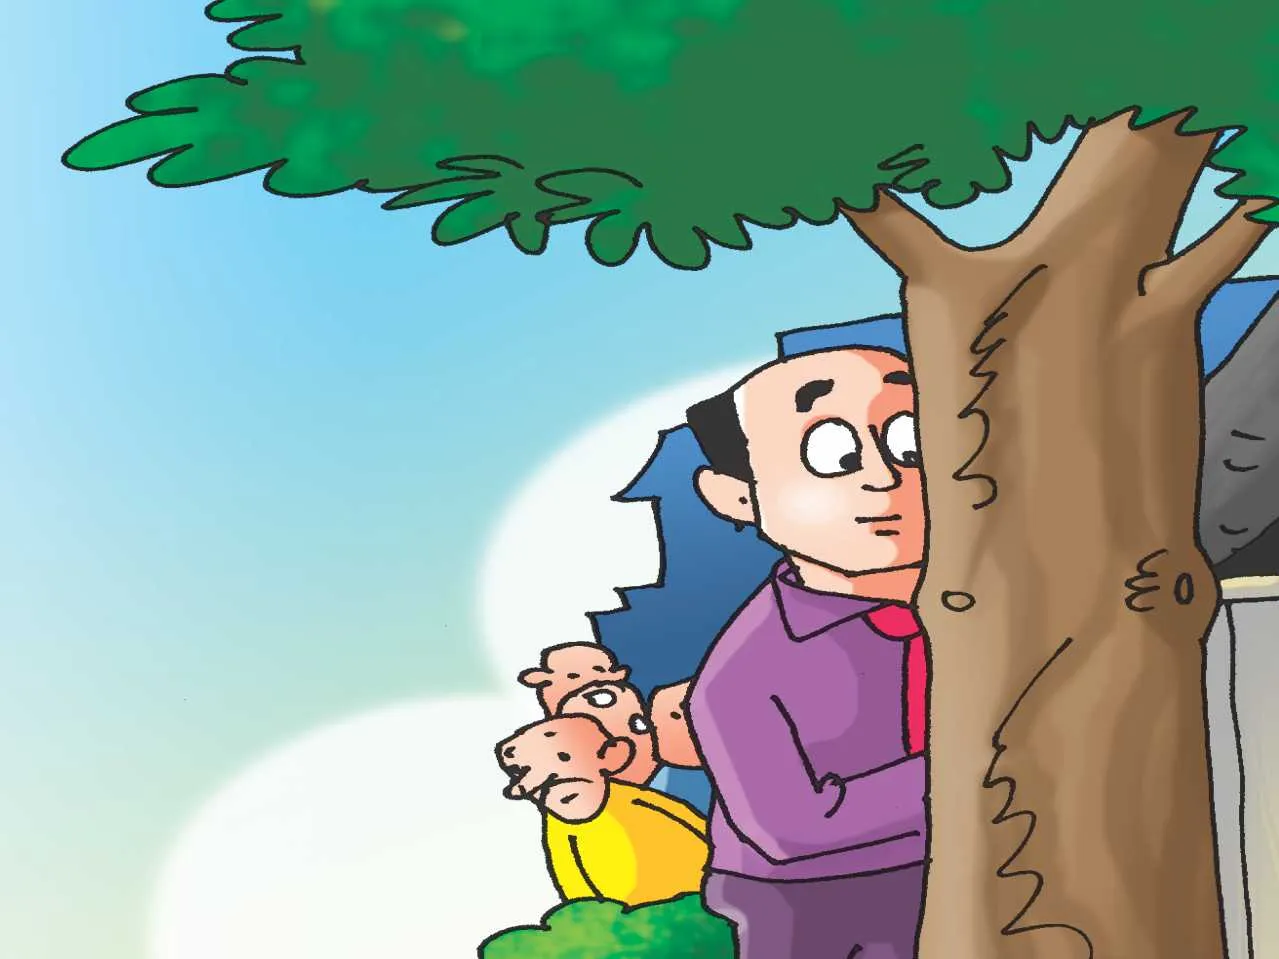 Man behind a tree cartoon image